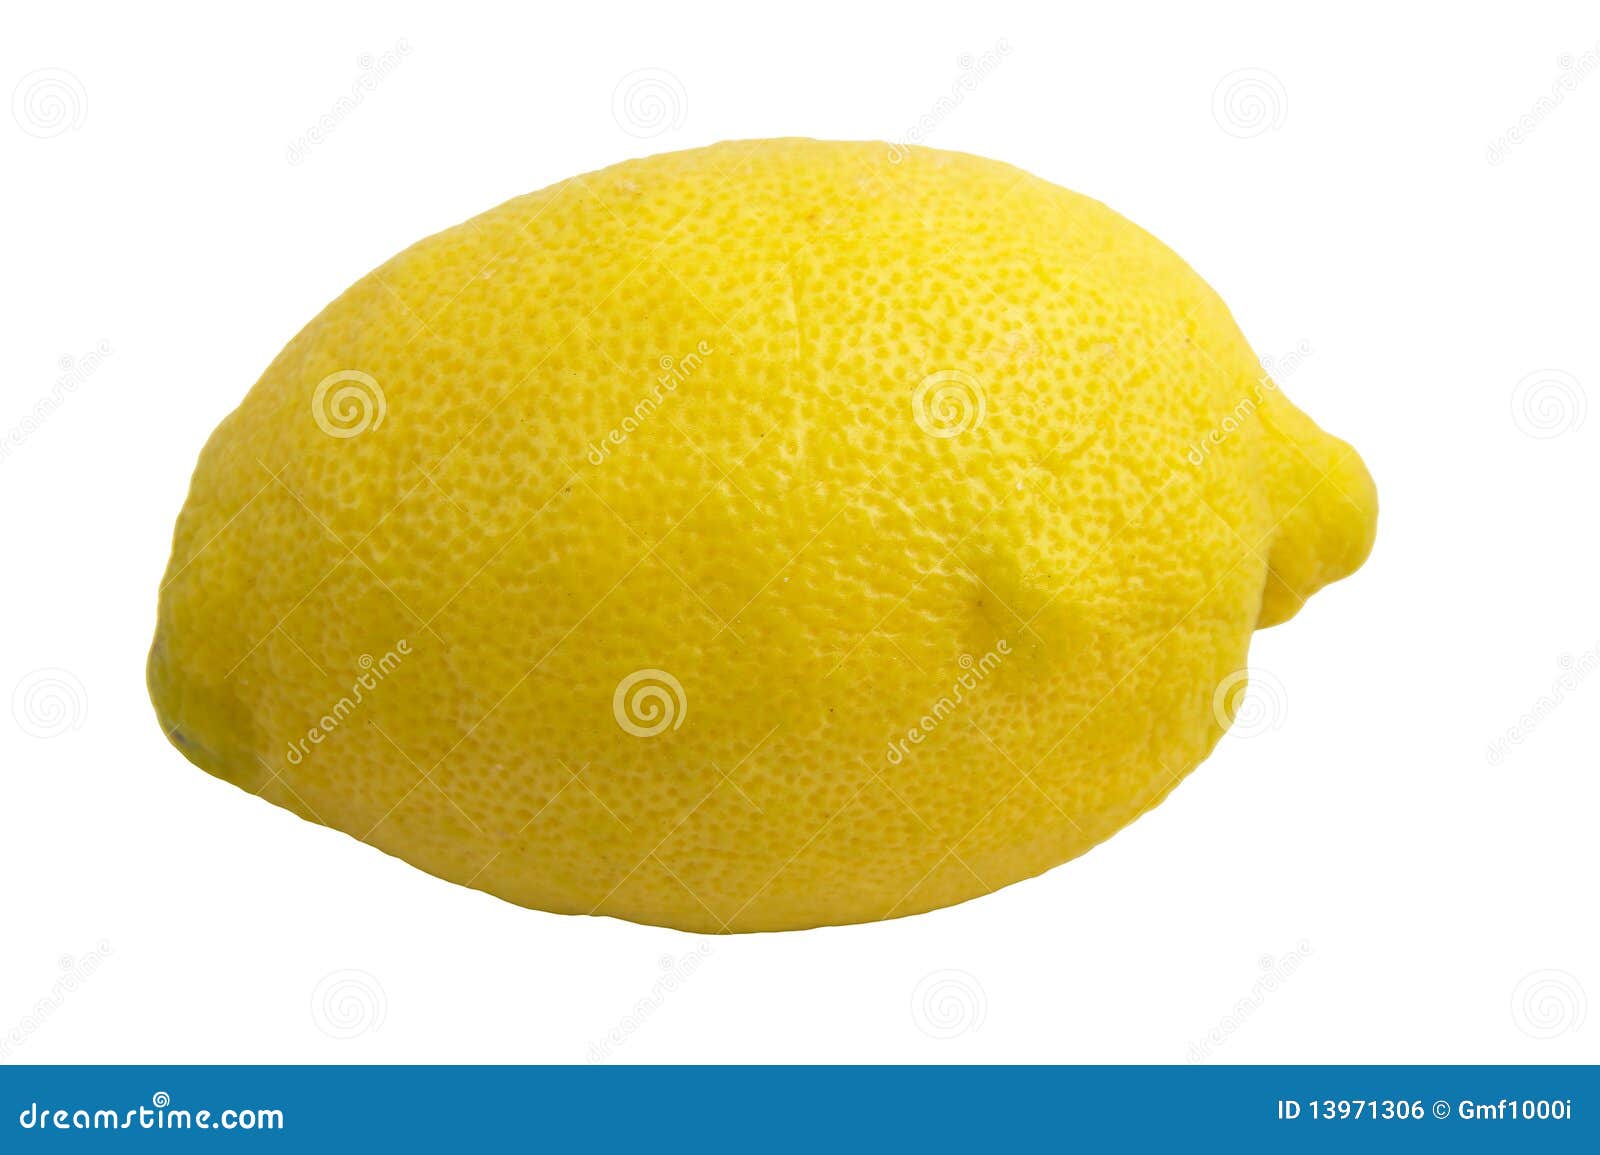 yellow lemon clipart - photo #49